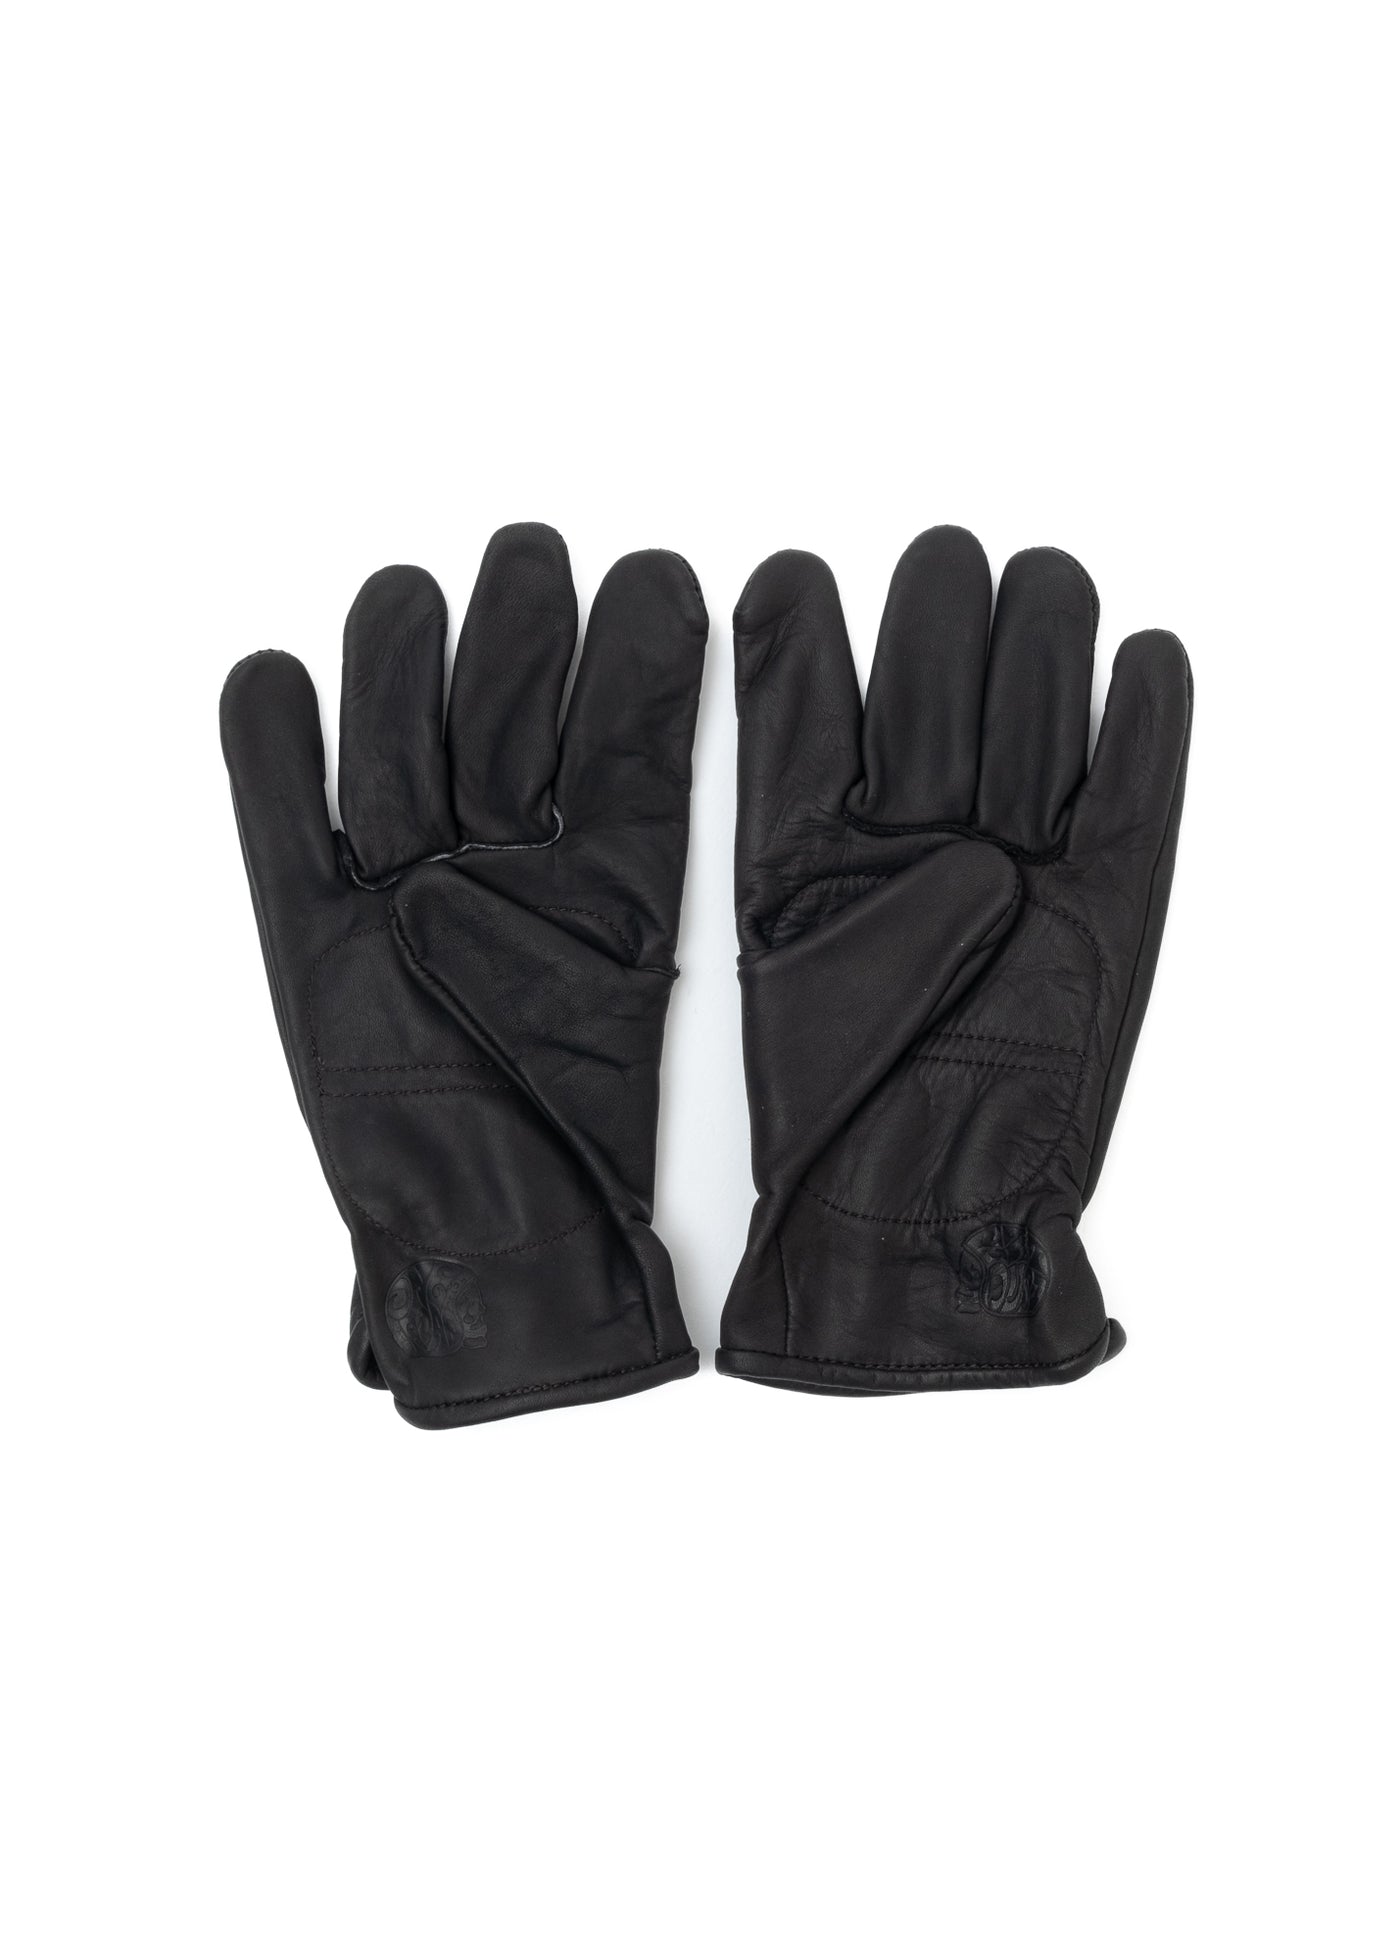 Power Gloves Leather Black